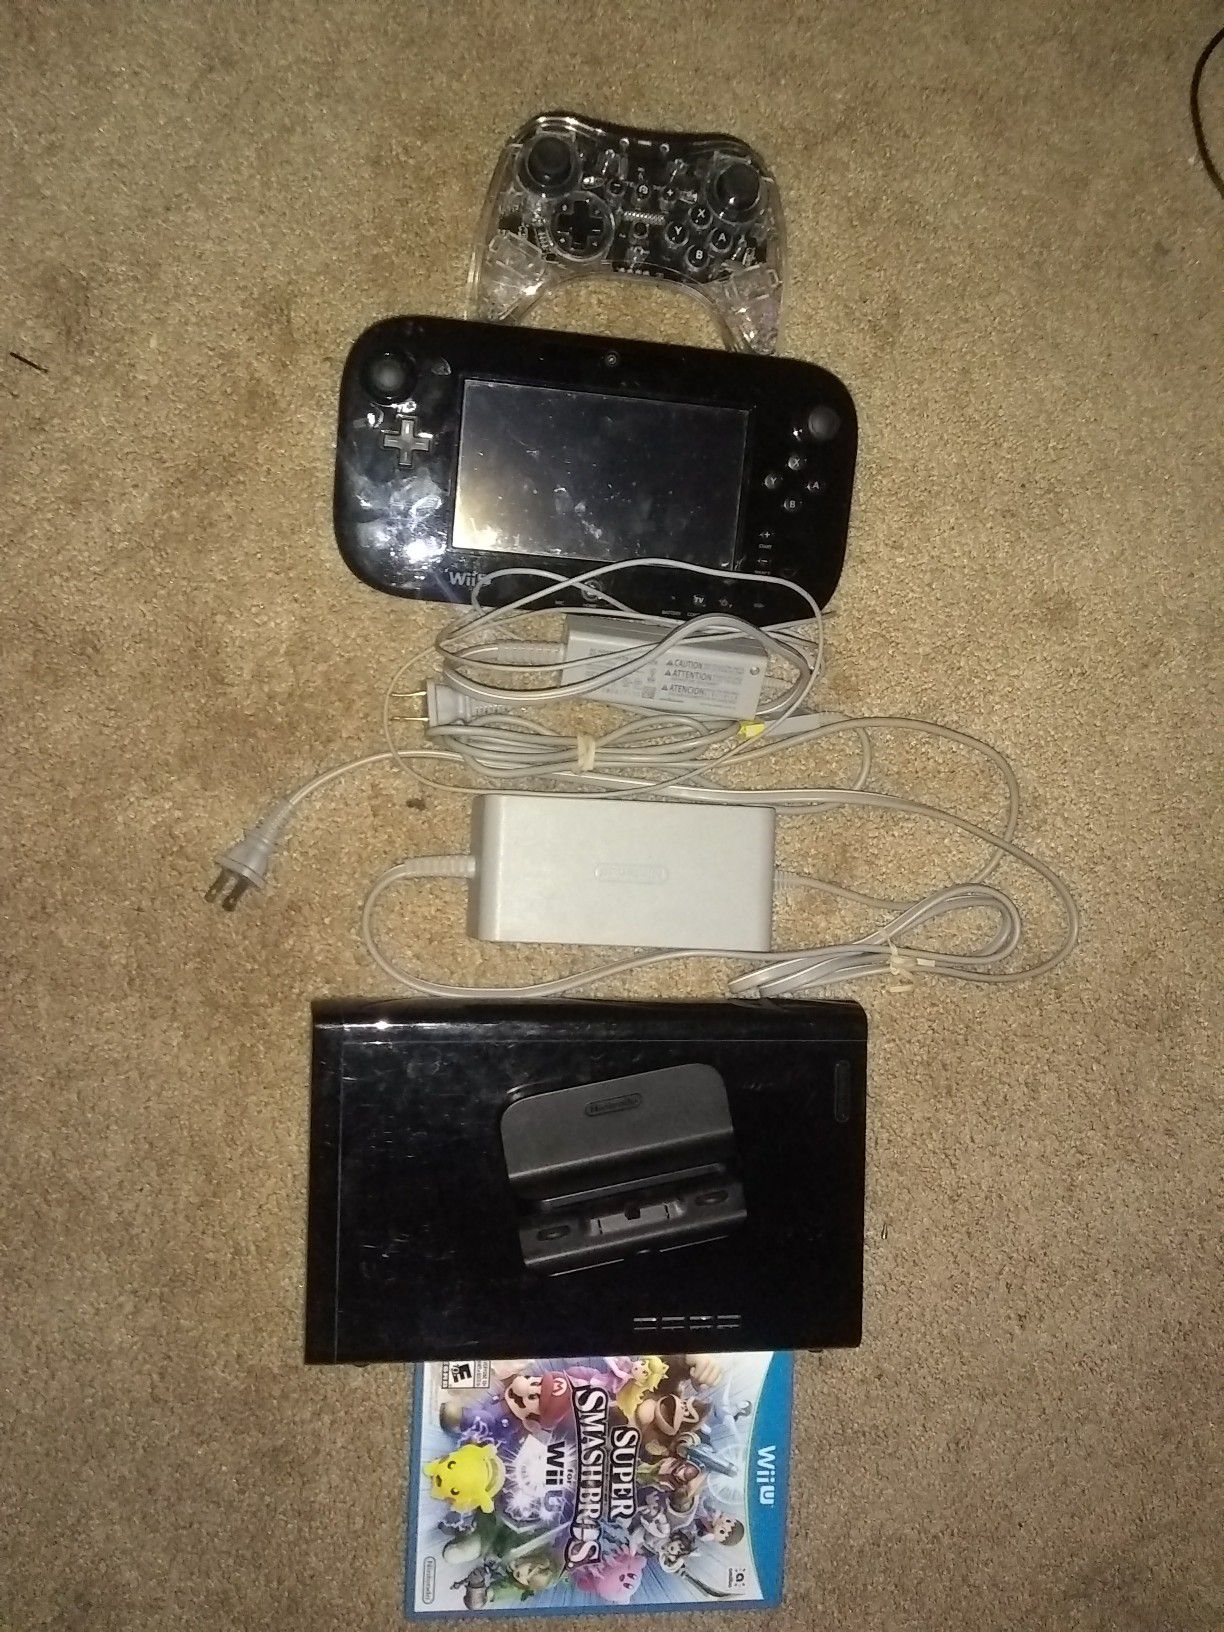 Wii U, Smash Bros Wii U, Wireless Controller